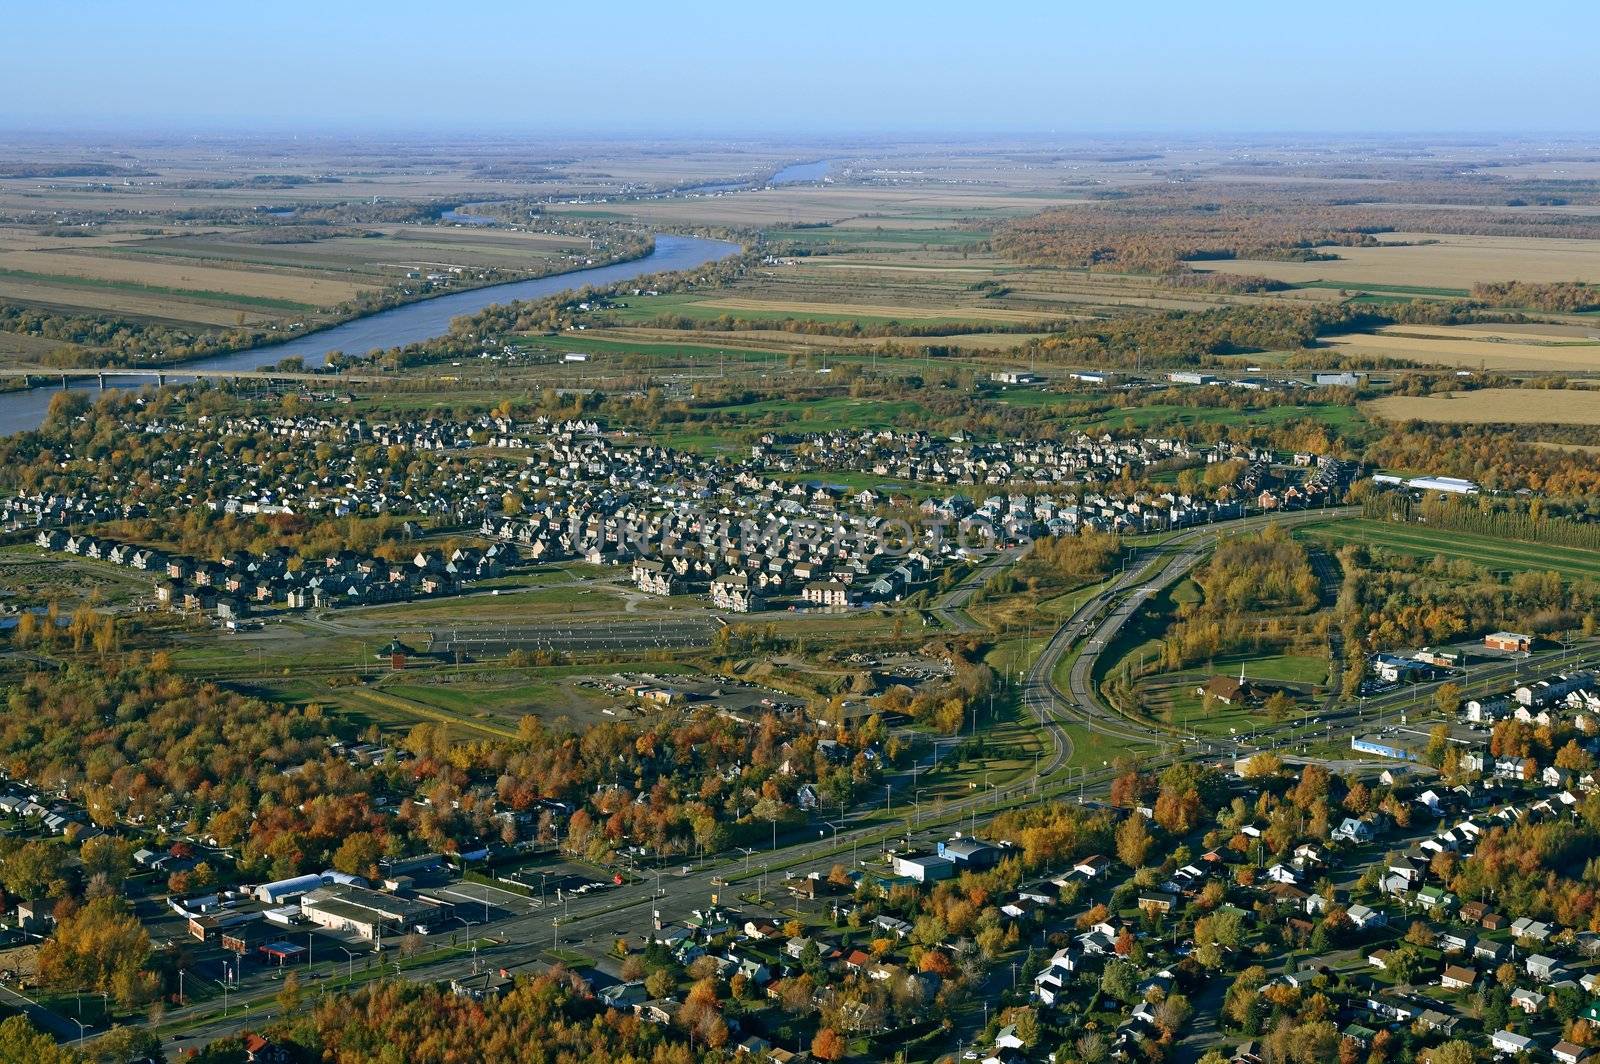 Aerial view of suburban neighborhood near highway by anikasalsera